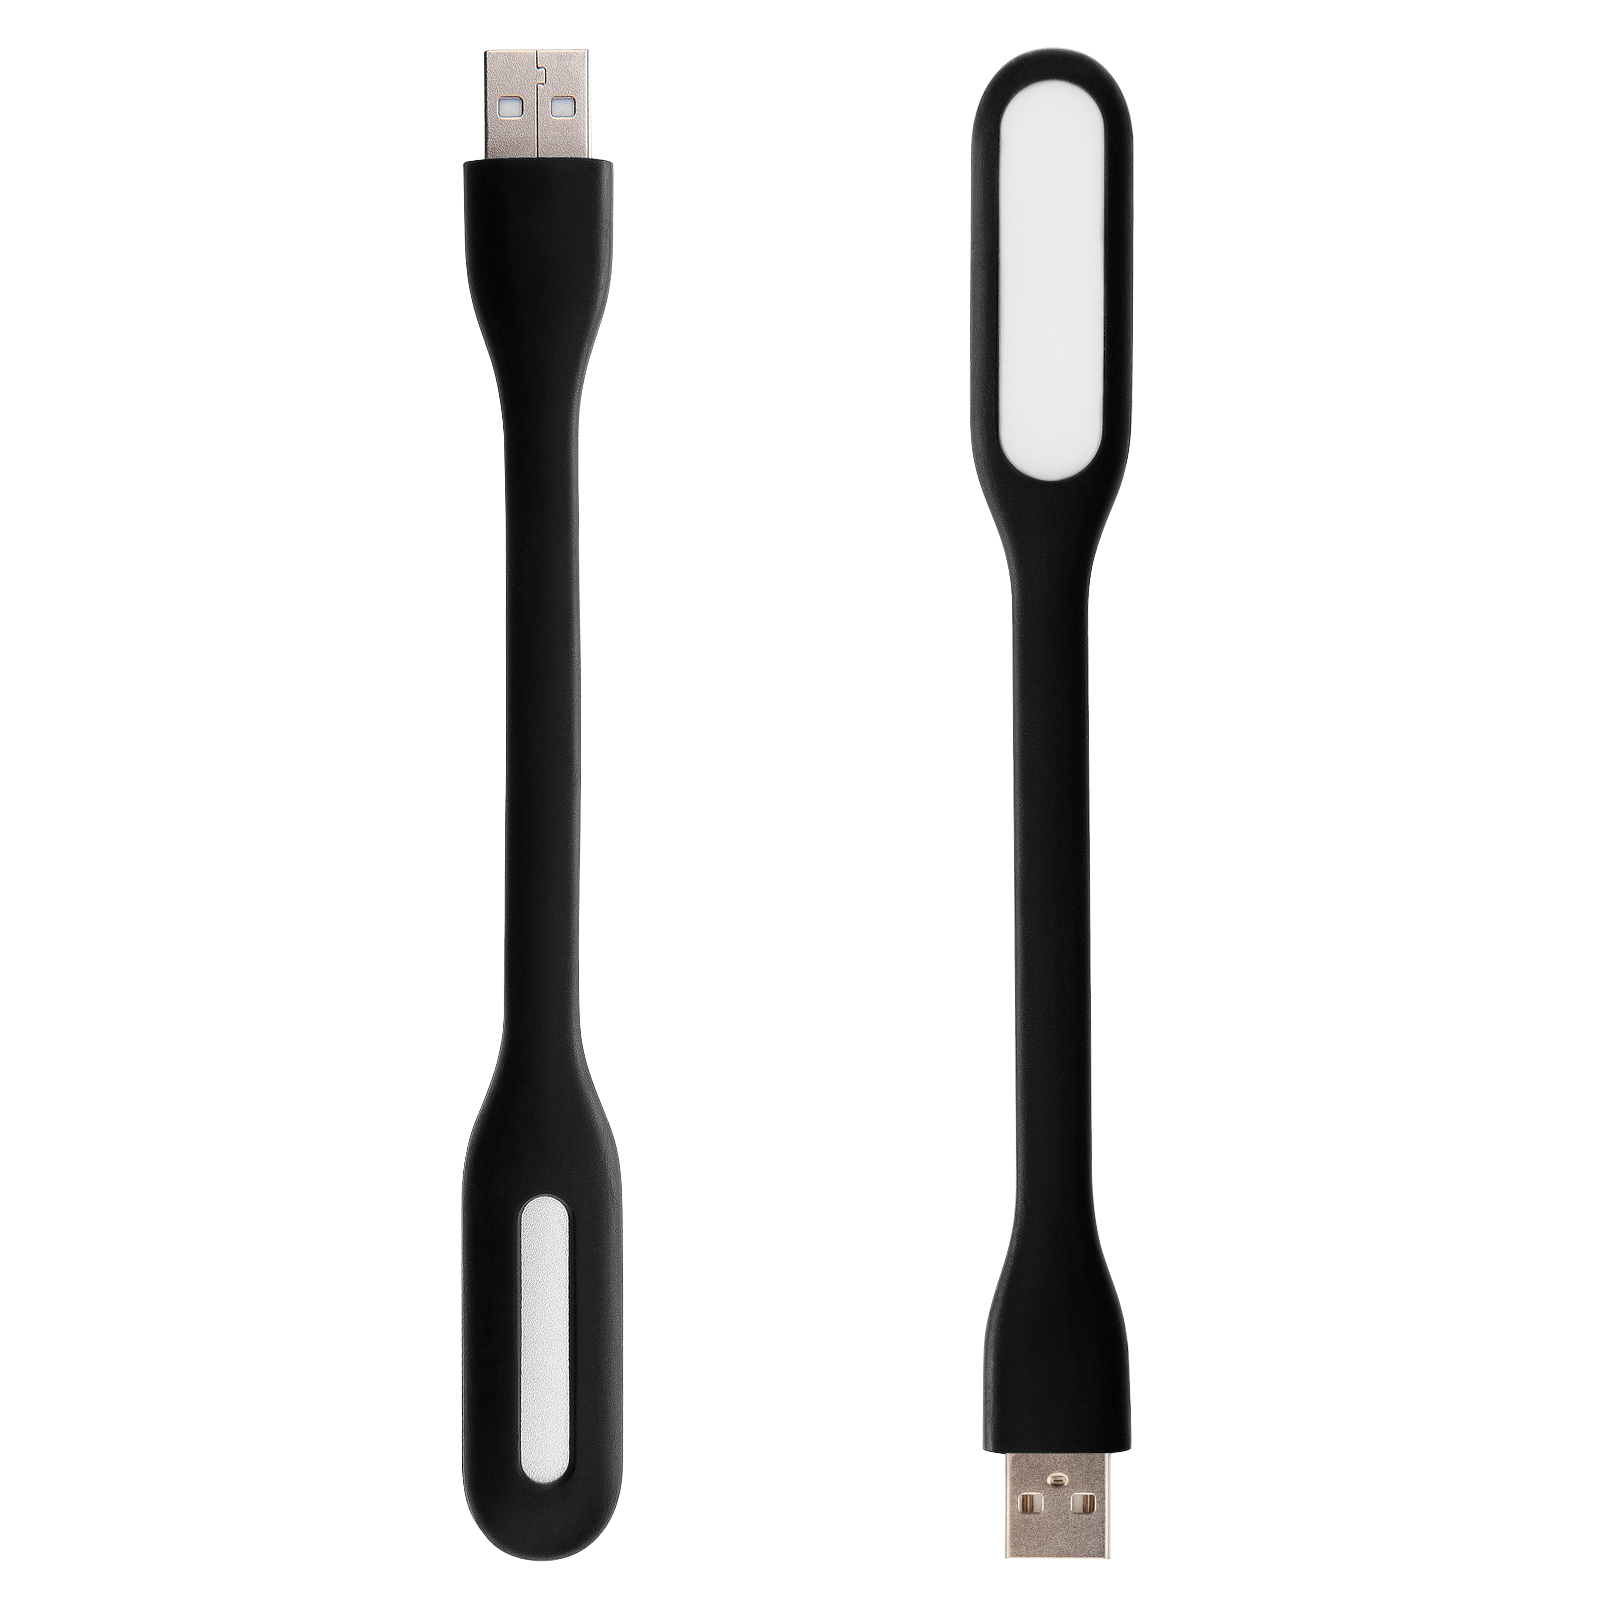 YouSave Accessories USB Light - Black